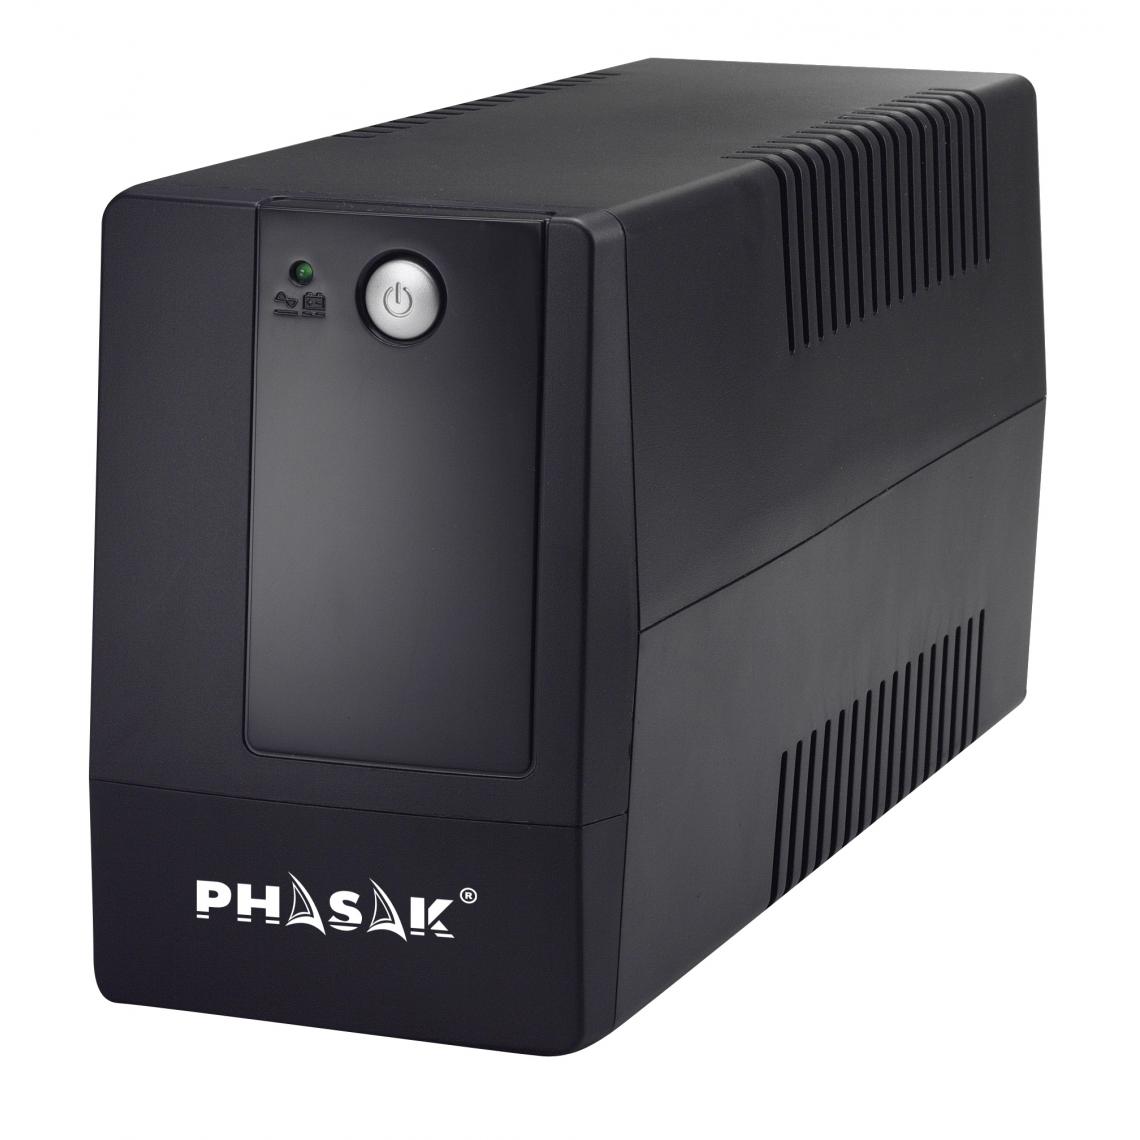 Phasak - PHASAK Onduleur PH 9408 800 VA - Onduleur